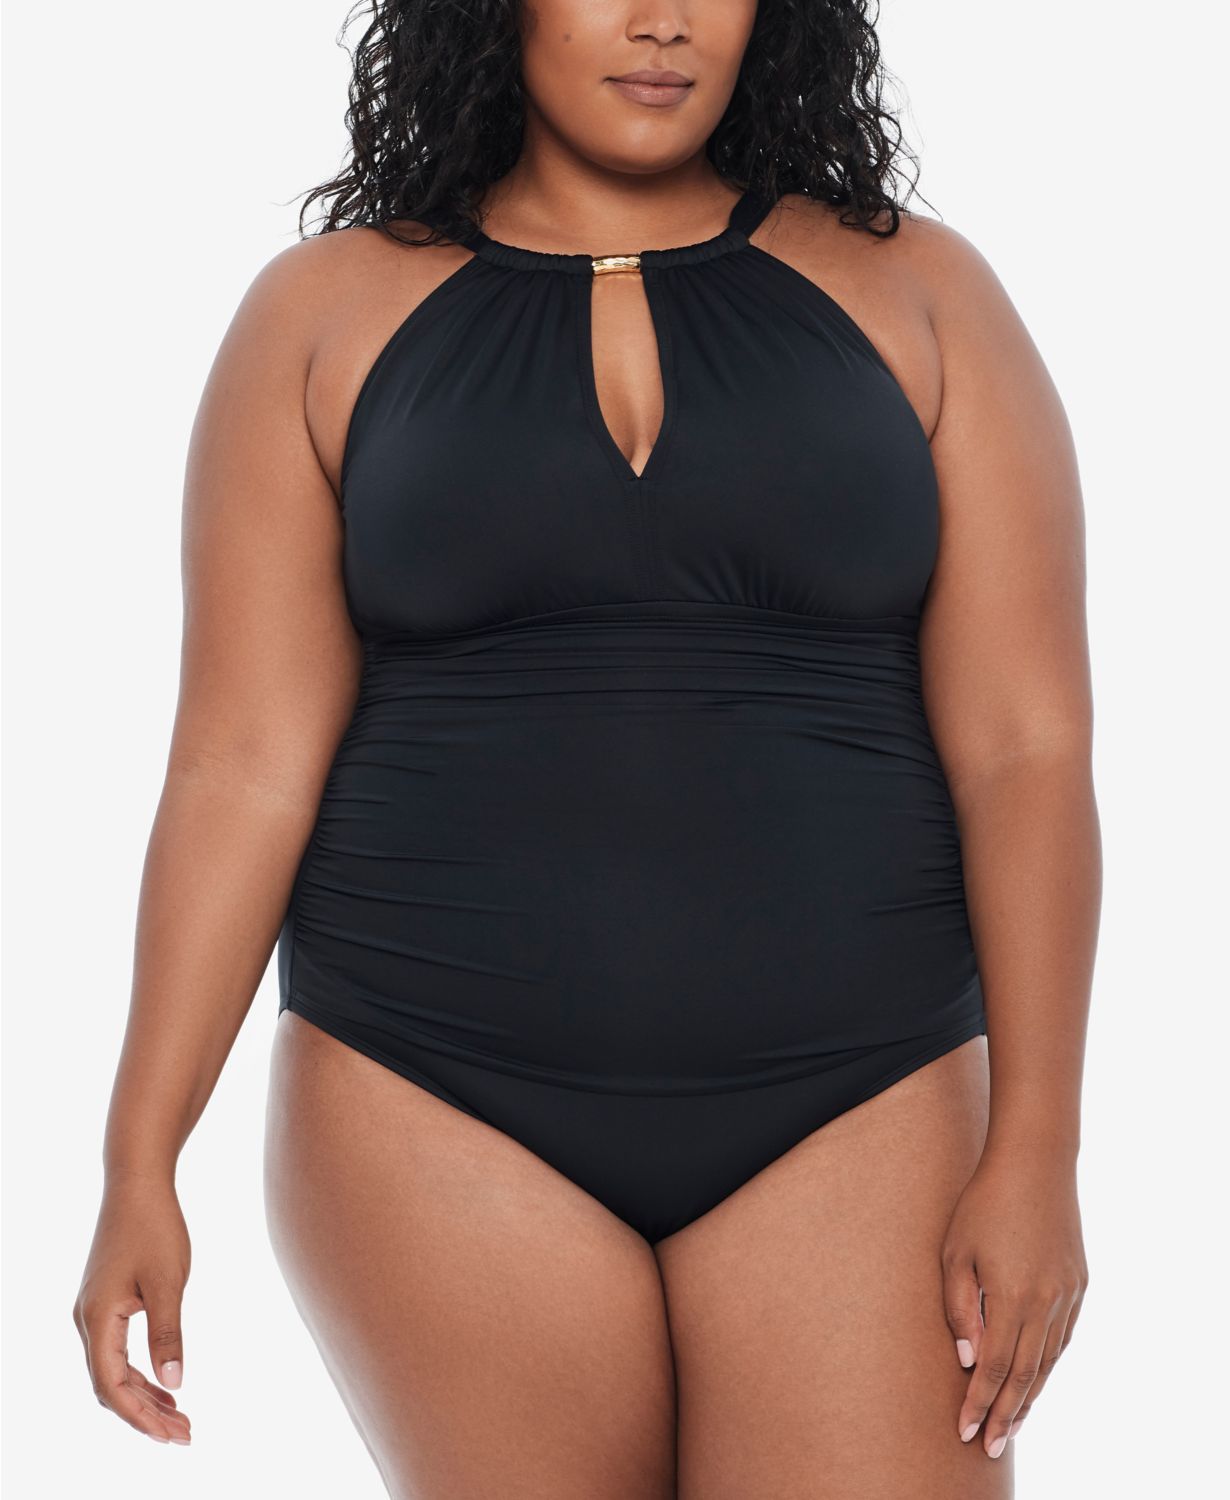 ZHONGLING Two Piece Swimsuits for Women Plus Size Tummy Control Swimwear Modest Bathing Suits with Boyshort Tankini Swimsuits 